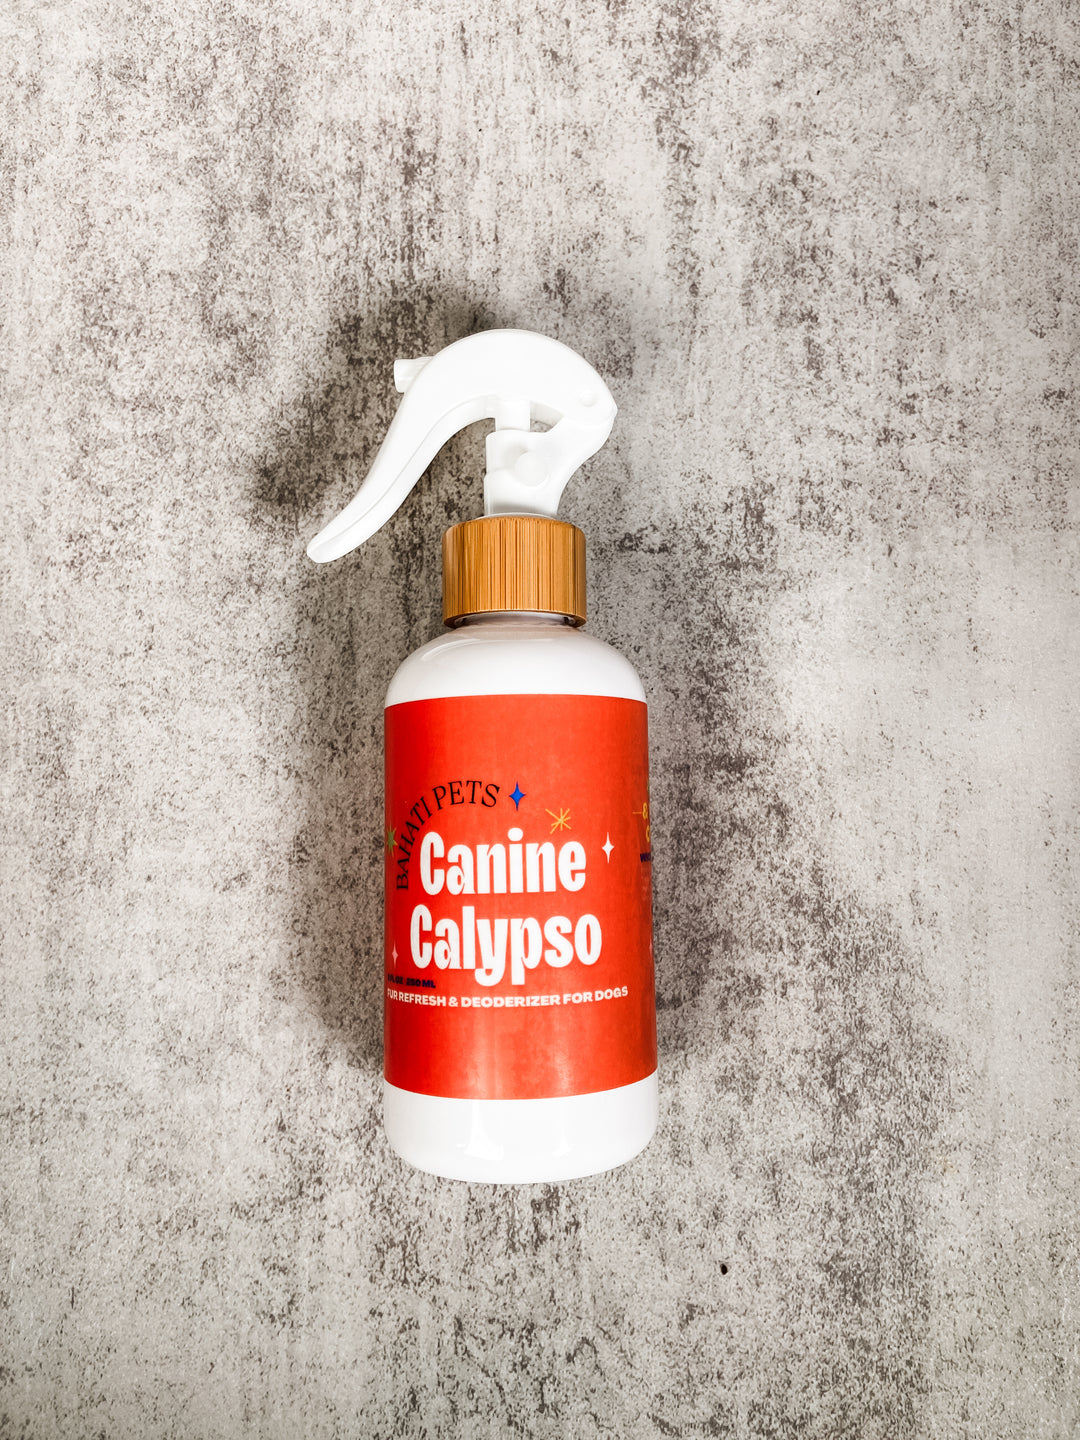 Fur Refresh & Deodorizer For Dogs: Canine Calypso